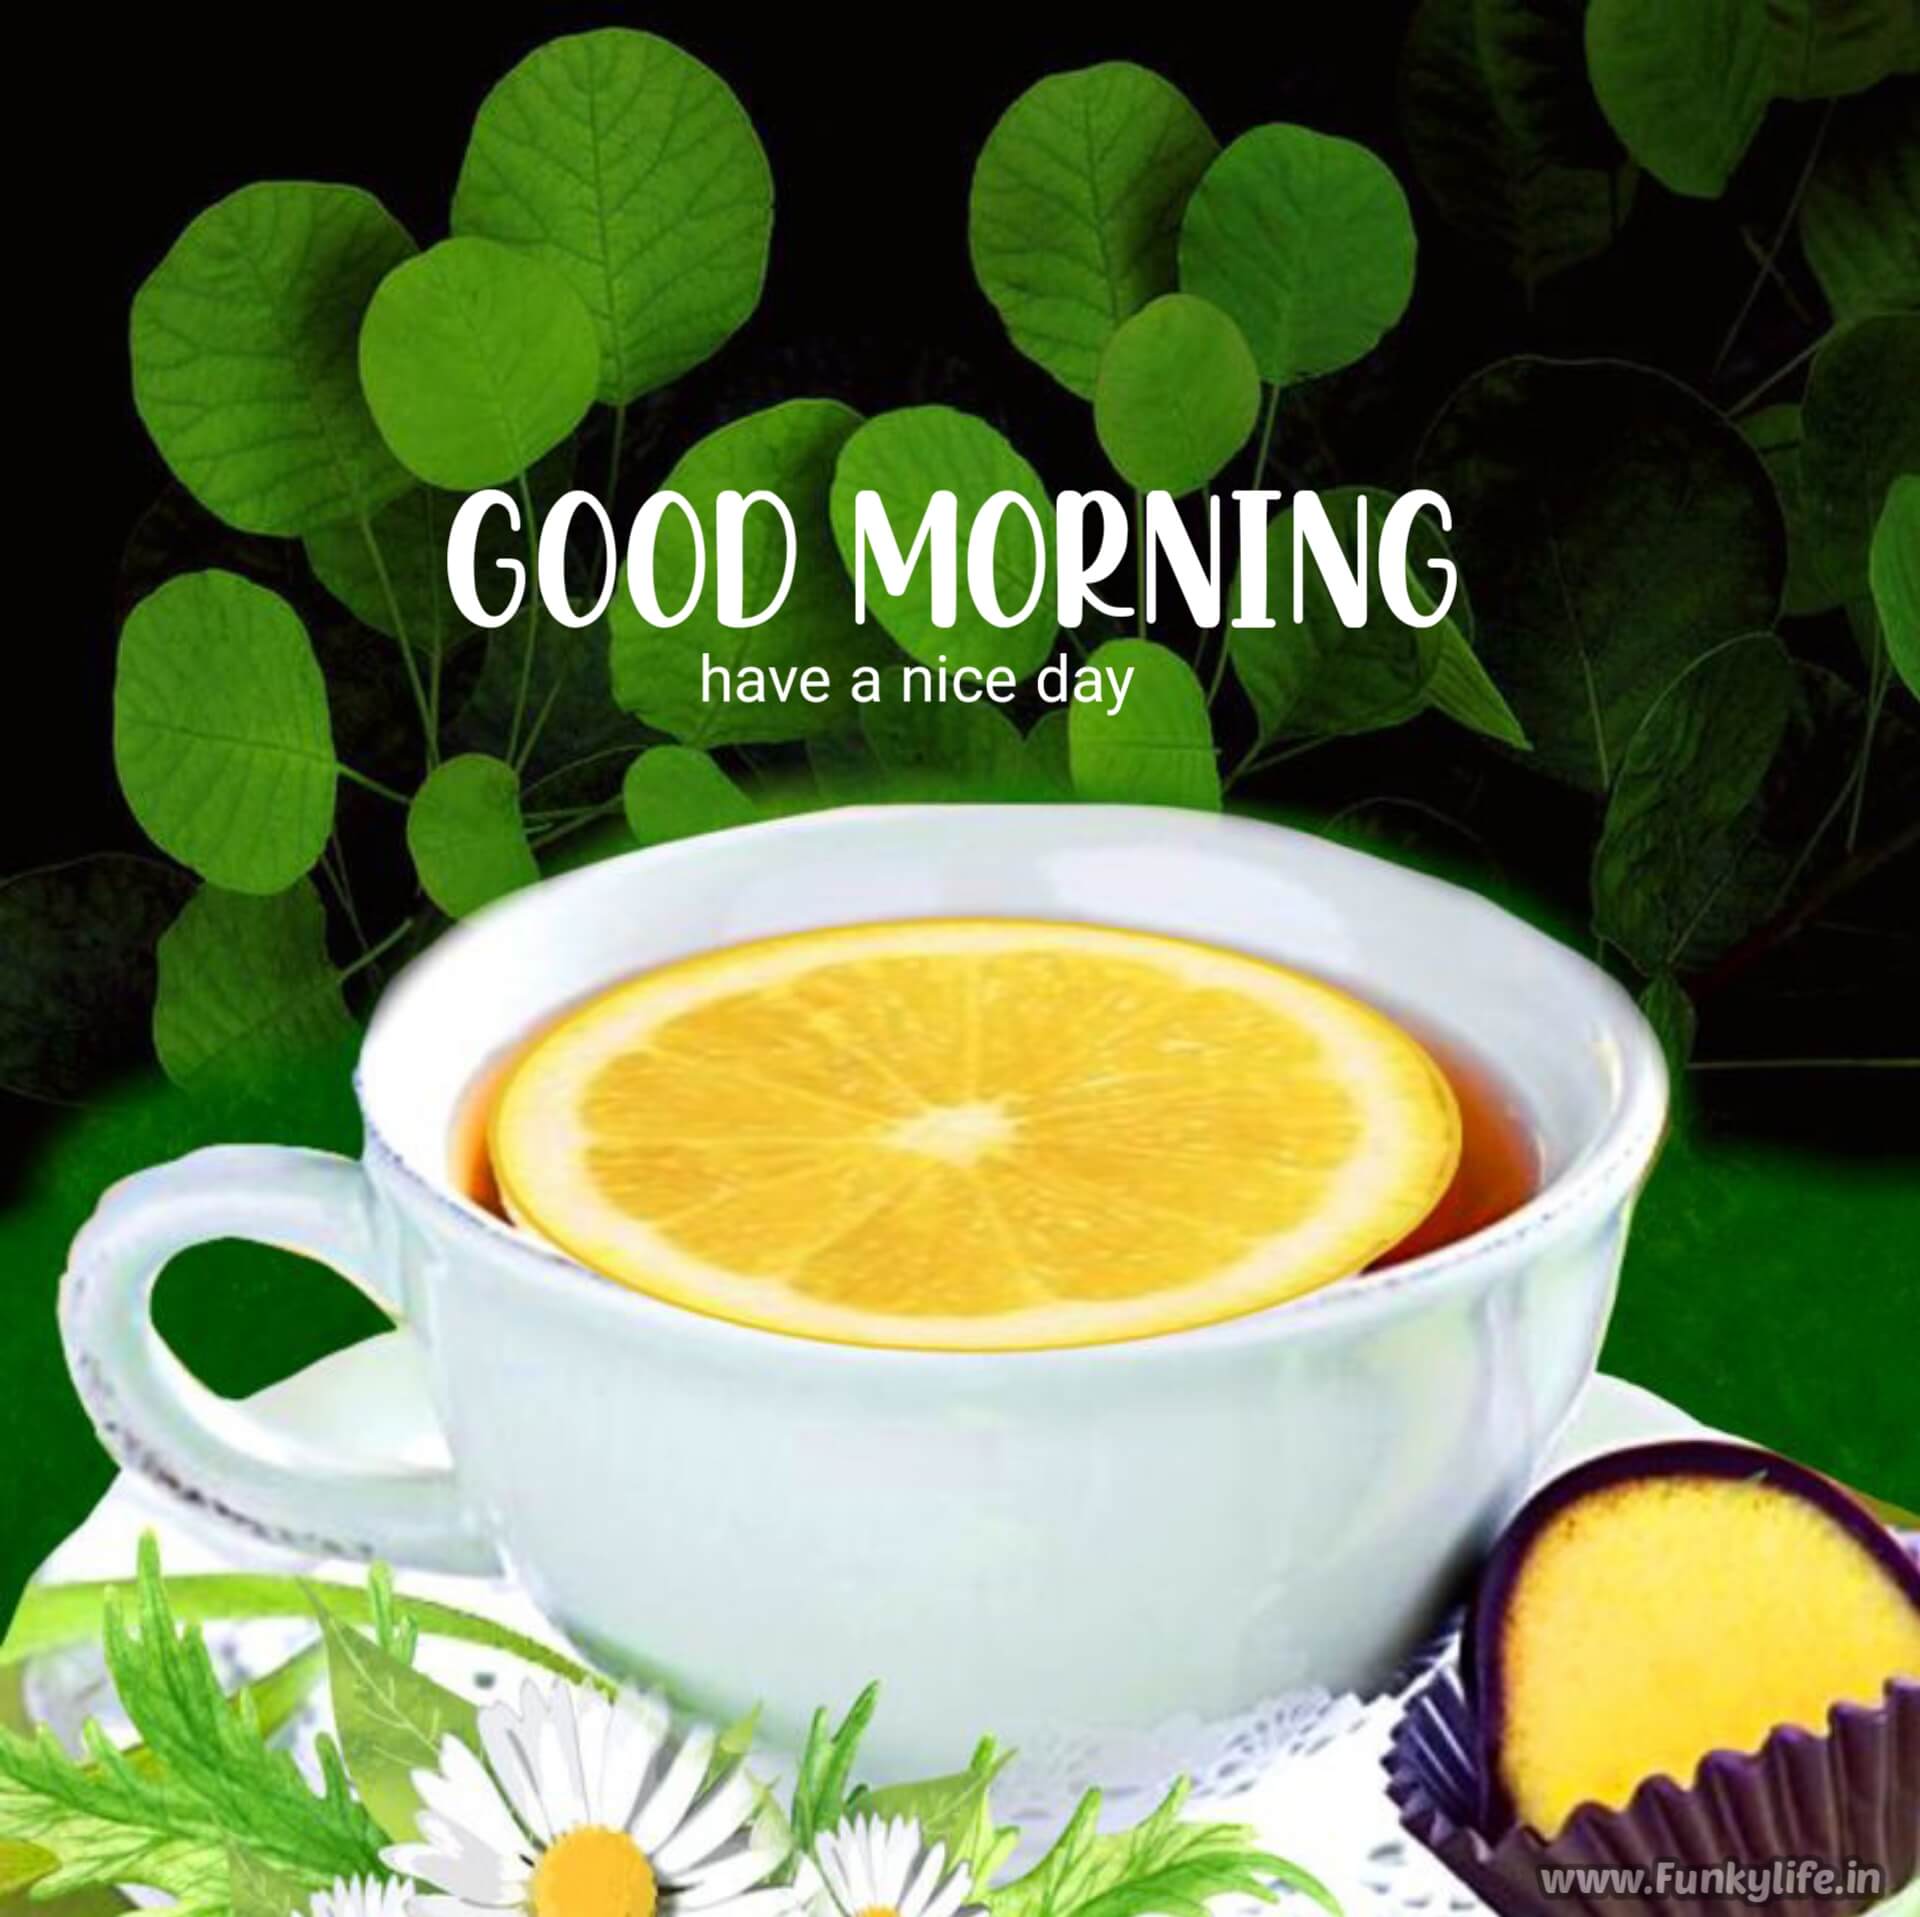 Lemon tea Good Morning Image